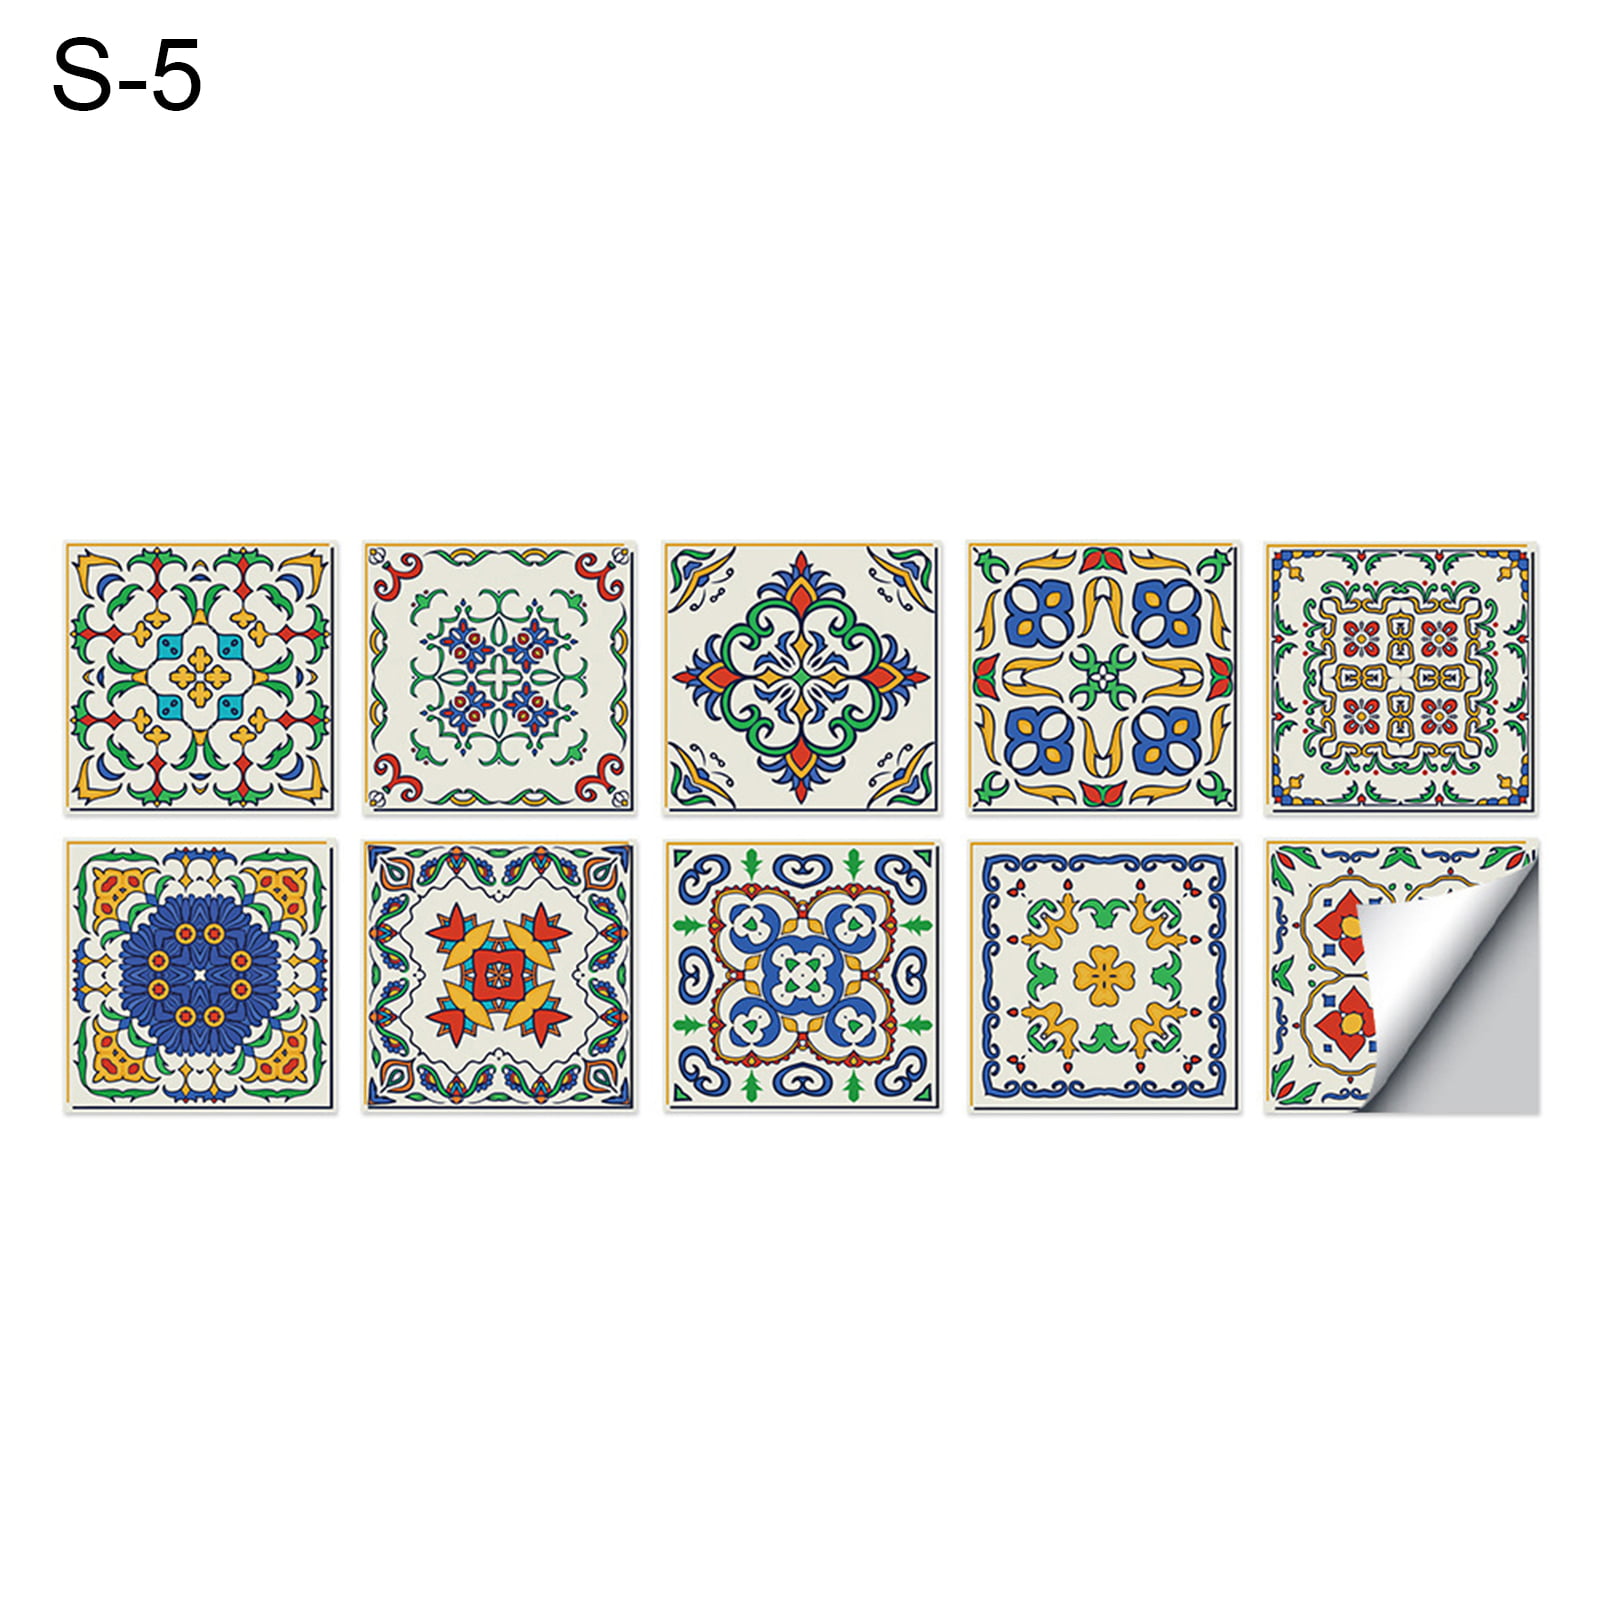 wall moroccan style geometric symmetry tile sticker diy kitchen home decor FT